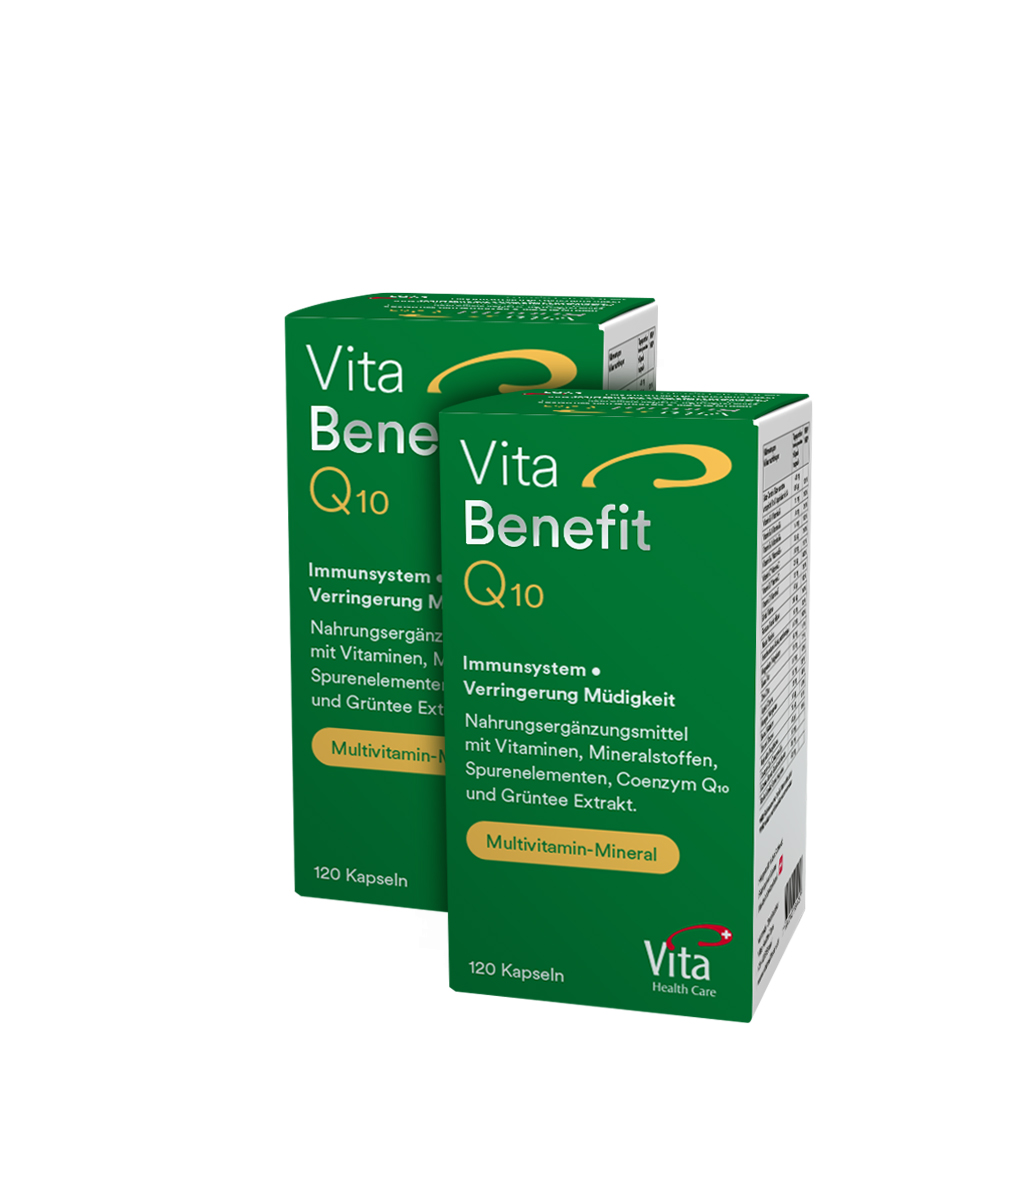  Vita Benefit Q10, Double pack 